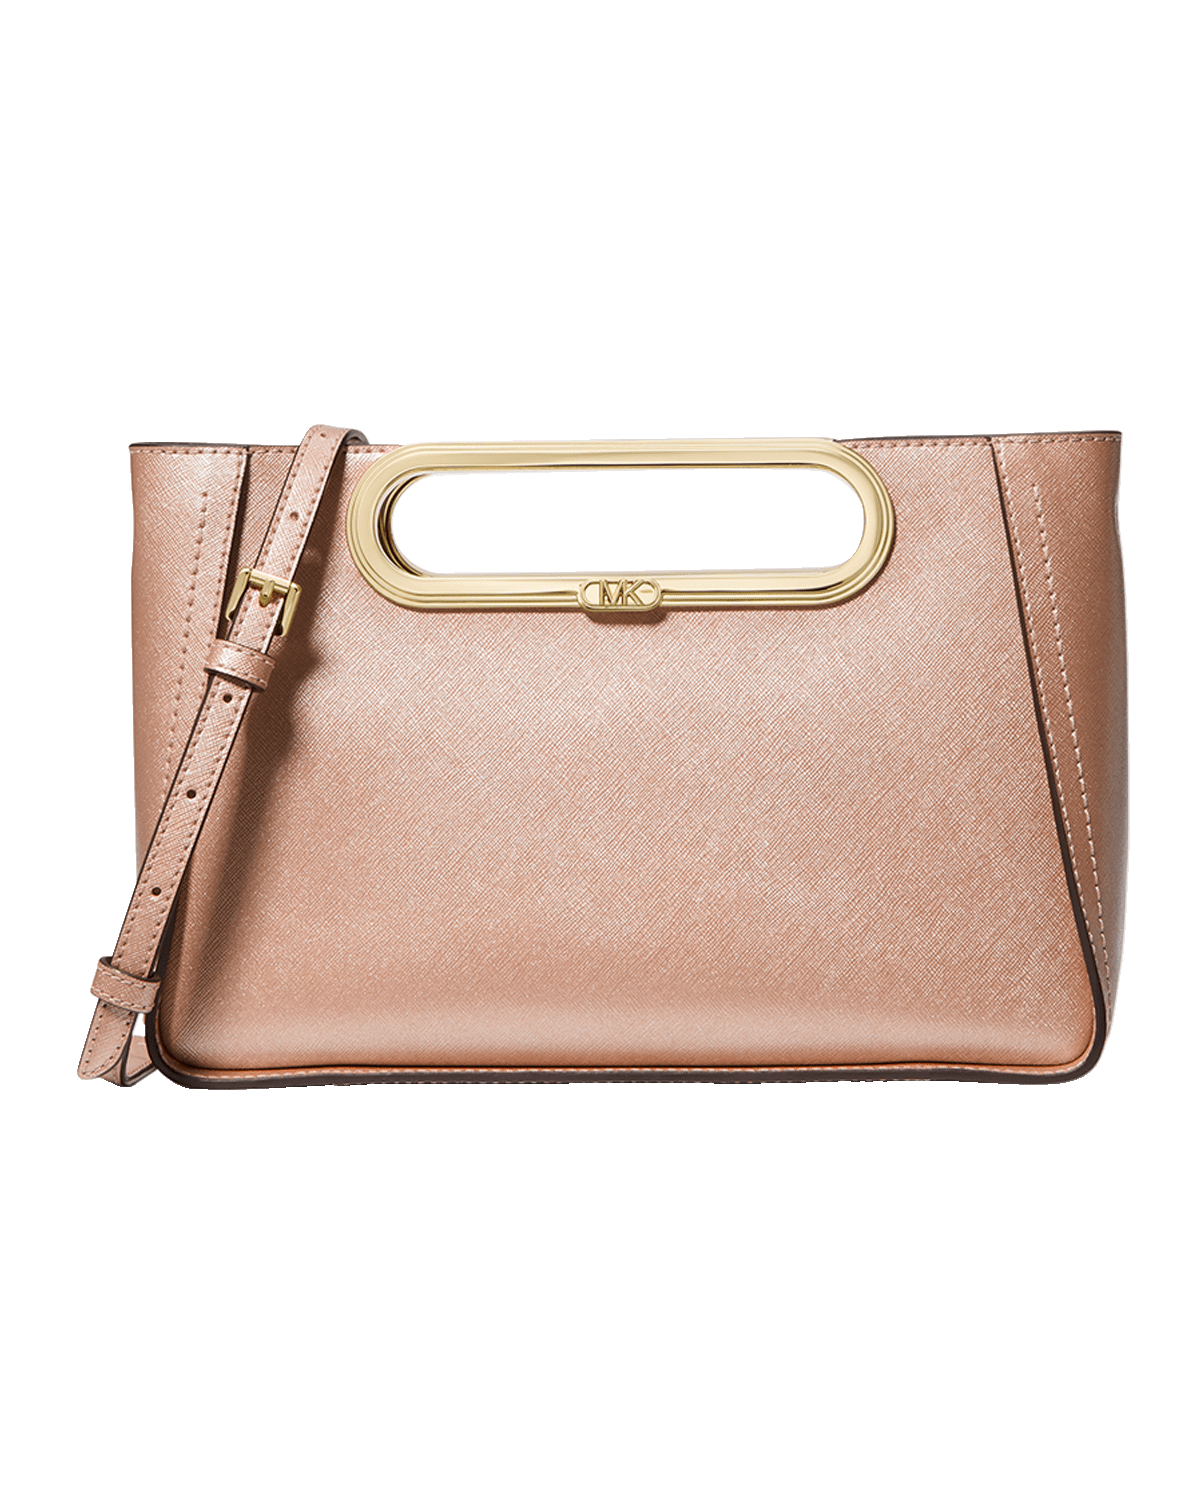 MICHAEL Michael Kors Grace Glitter Clutch Bag in Metallic